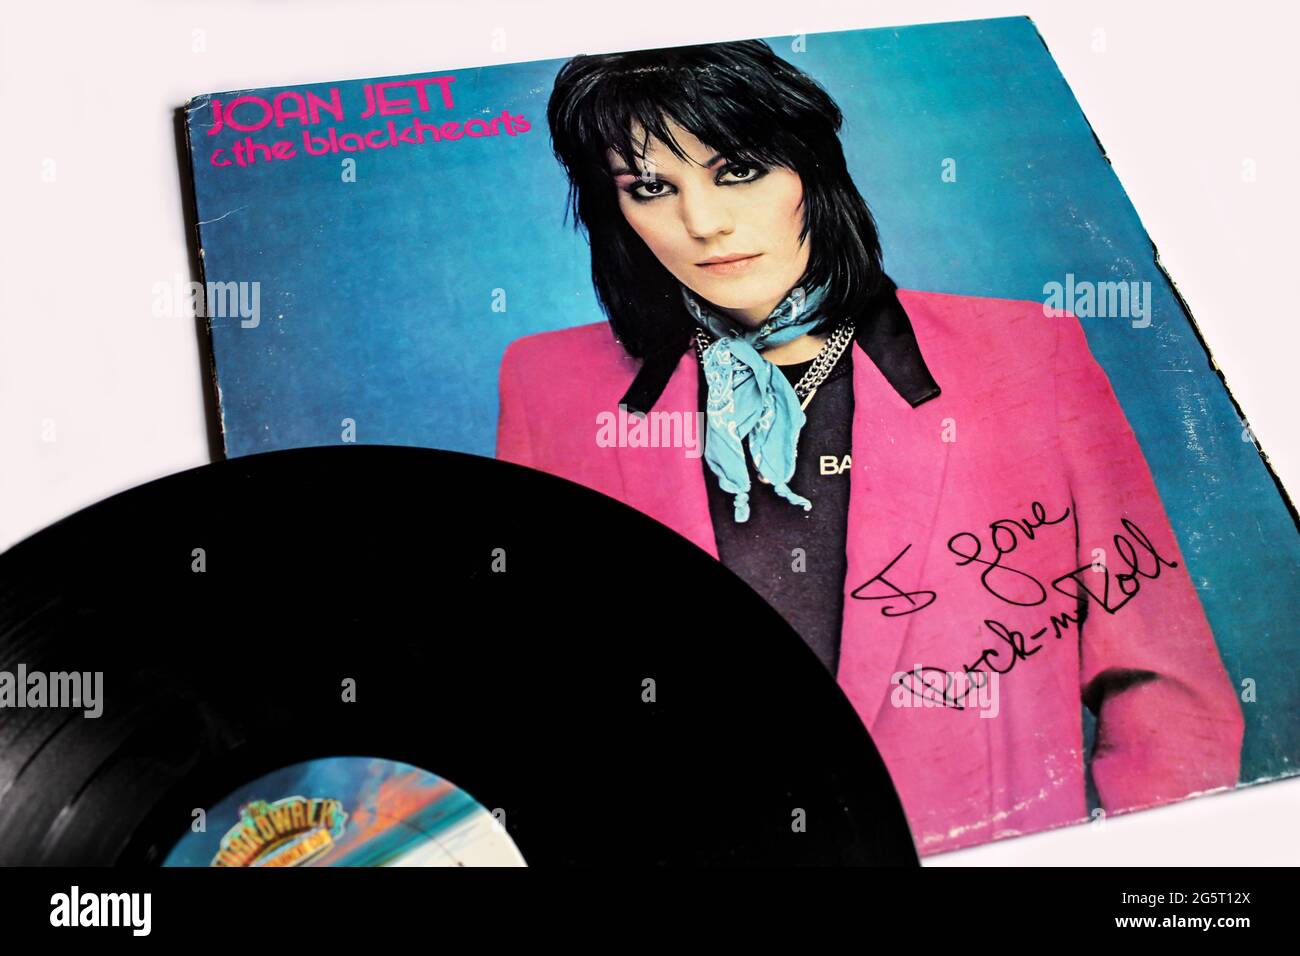 Hard Rock und Punk Rock Band, Joan Jett & The Blackhearts Musikalbum auf Vinyl LP Disc. Titel: I Love Rock n Roll Album Cover Stockfoto